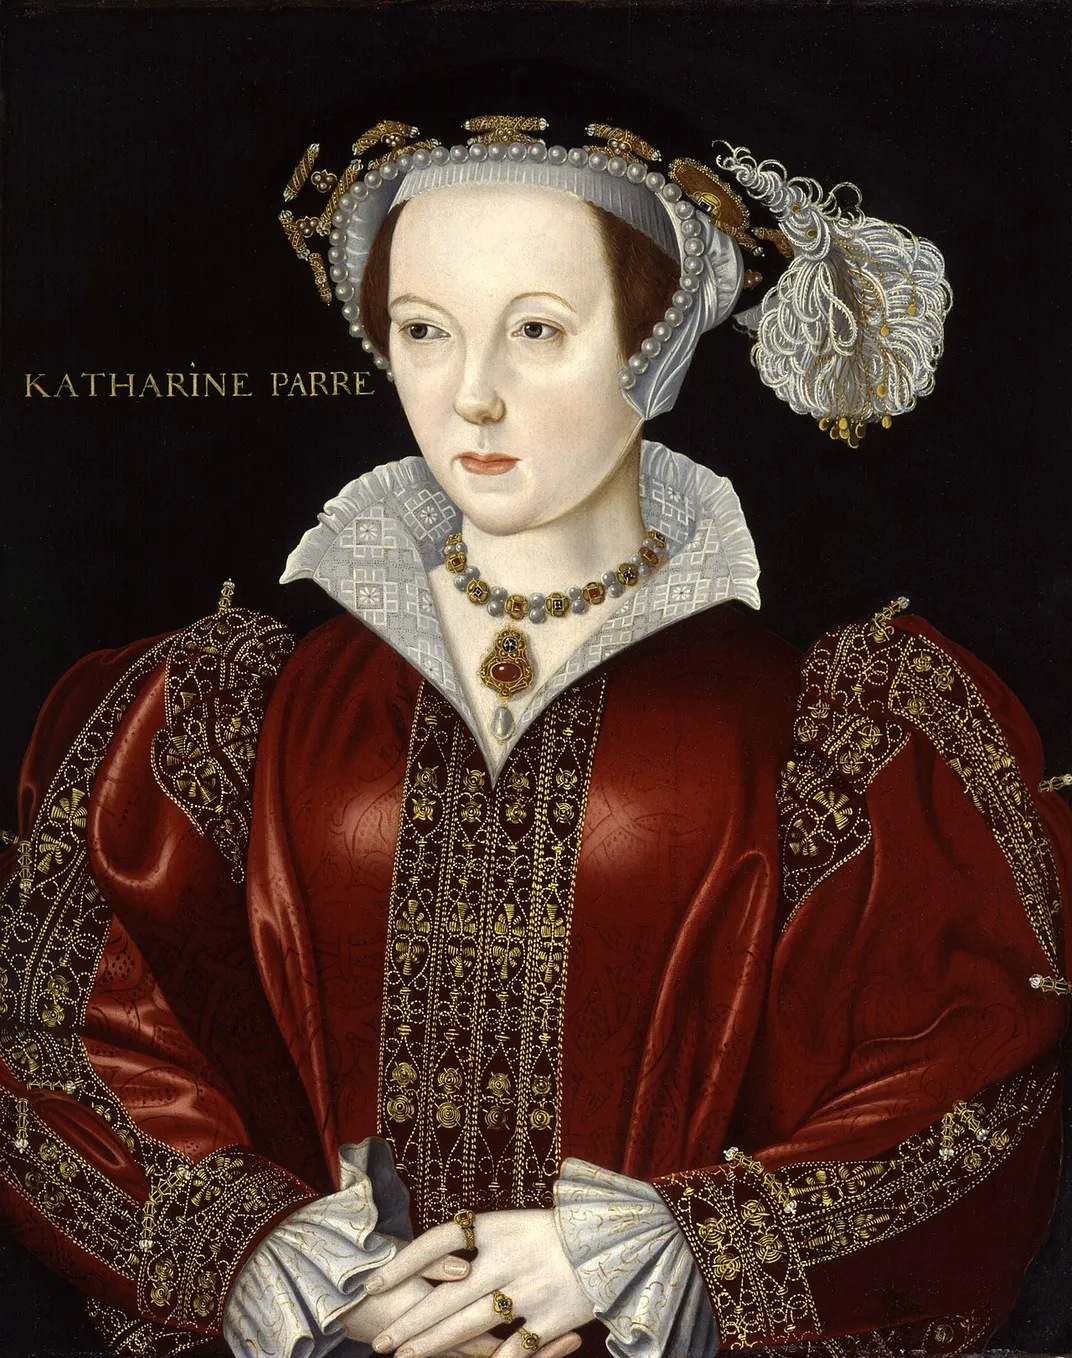 Elizabeth's stepmother Catherine Parr